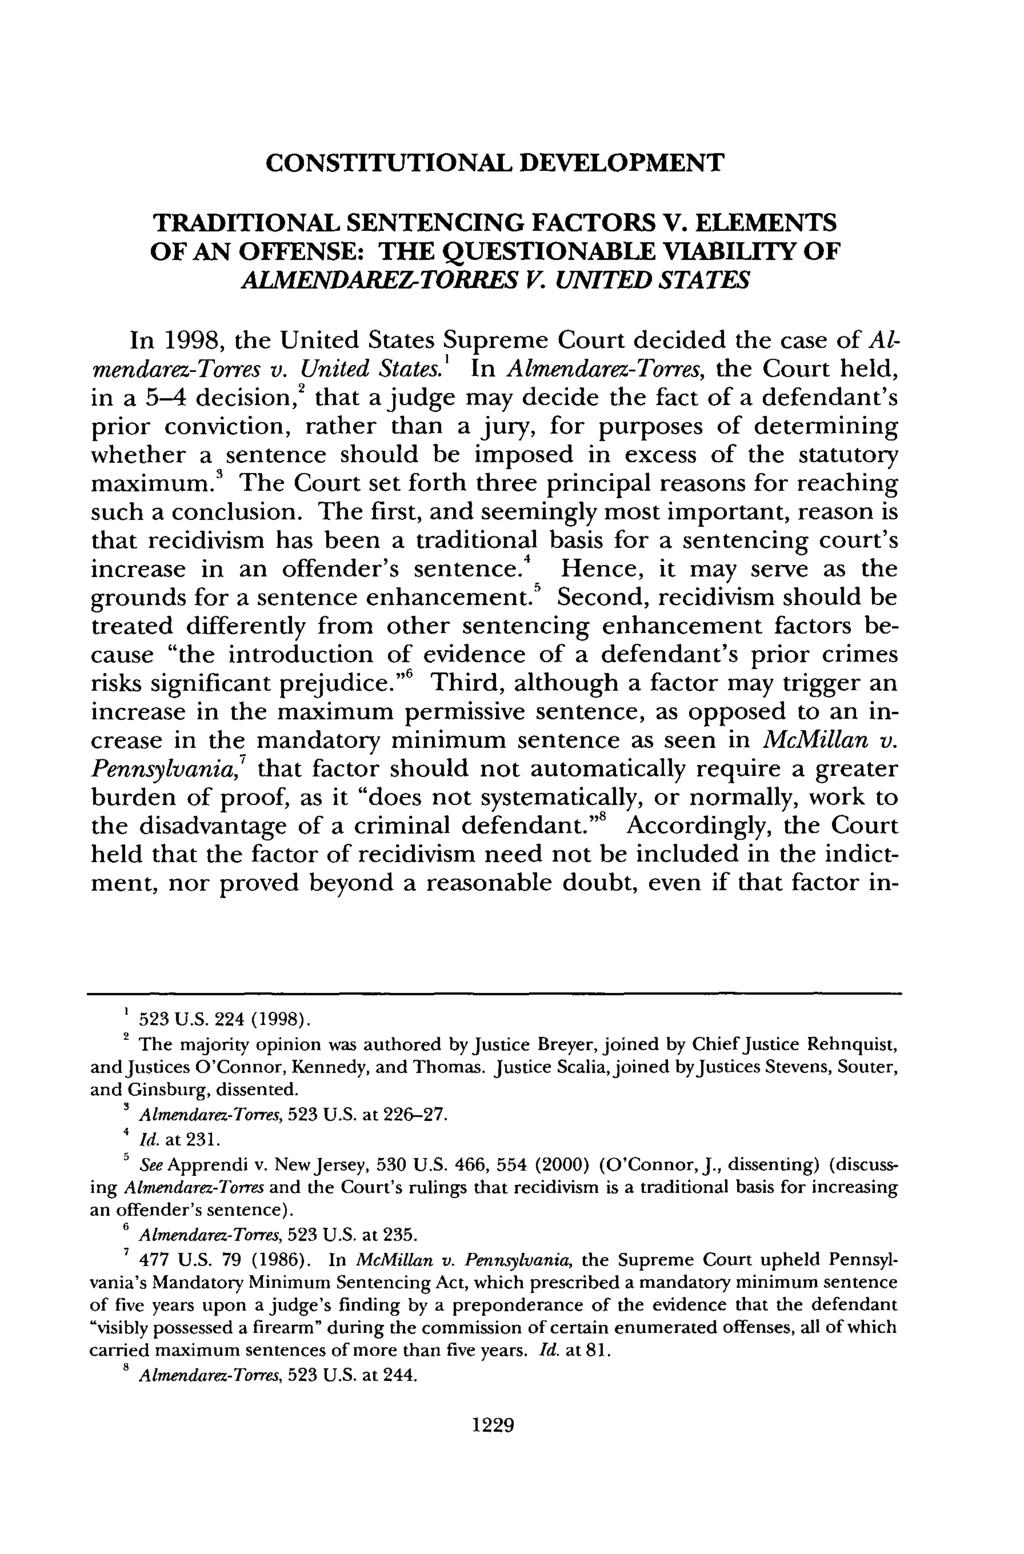 CONSTITUTIONAL DEVELOPMENT TRADITIONAL SENTENCING FACTORS V. ELEMENTS OF AN OFFENSE: THE QUESTIONABLE VIABILITY OF ALMENDAREZ-7TORRES V.